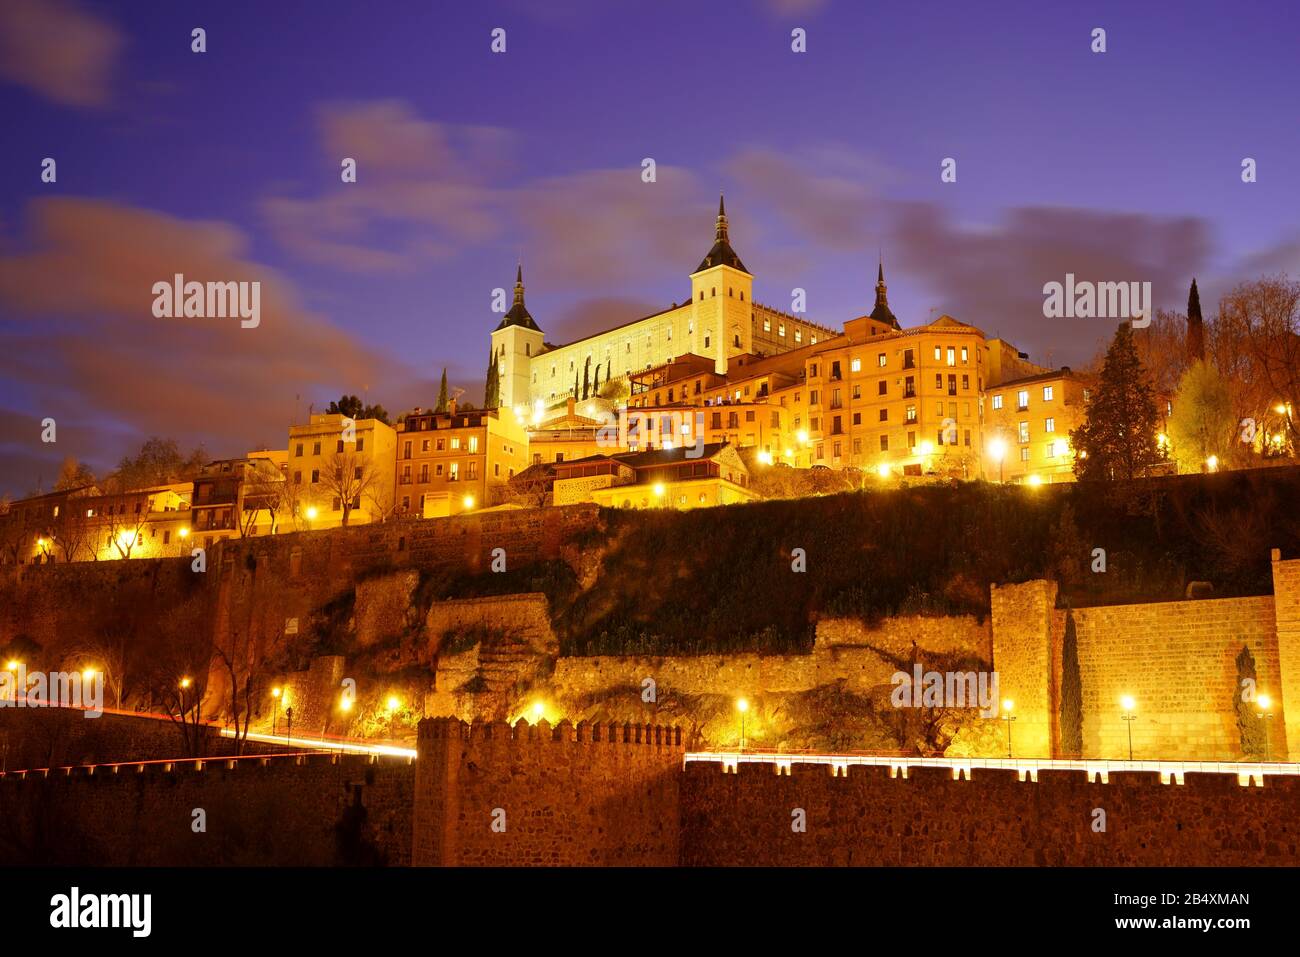 Toledo in Spain at night. Famous UNESCO World Heritage Site. The historic city in beautiful illumination after sunset. Stock Photo